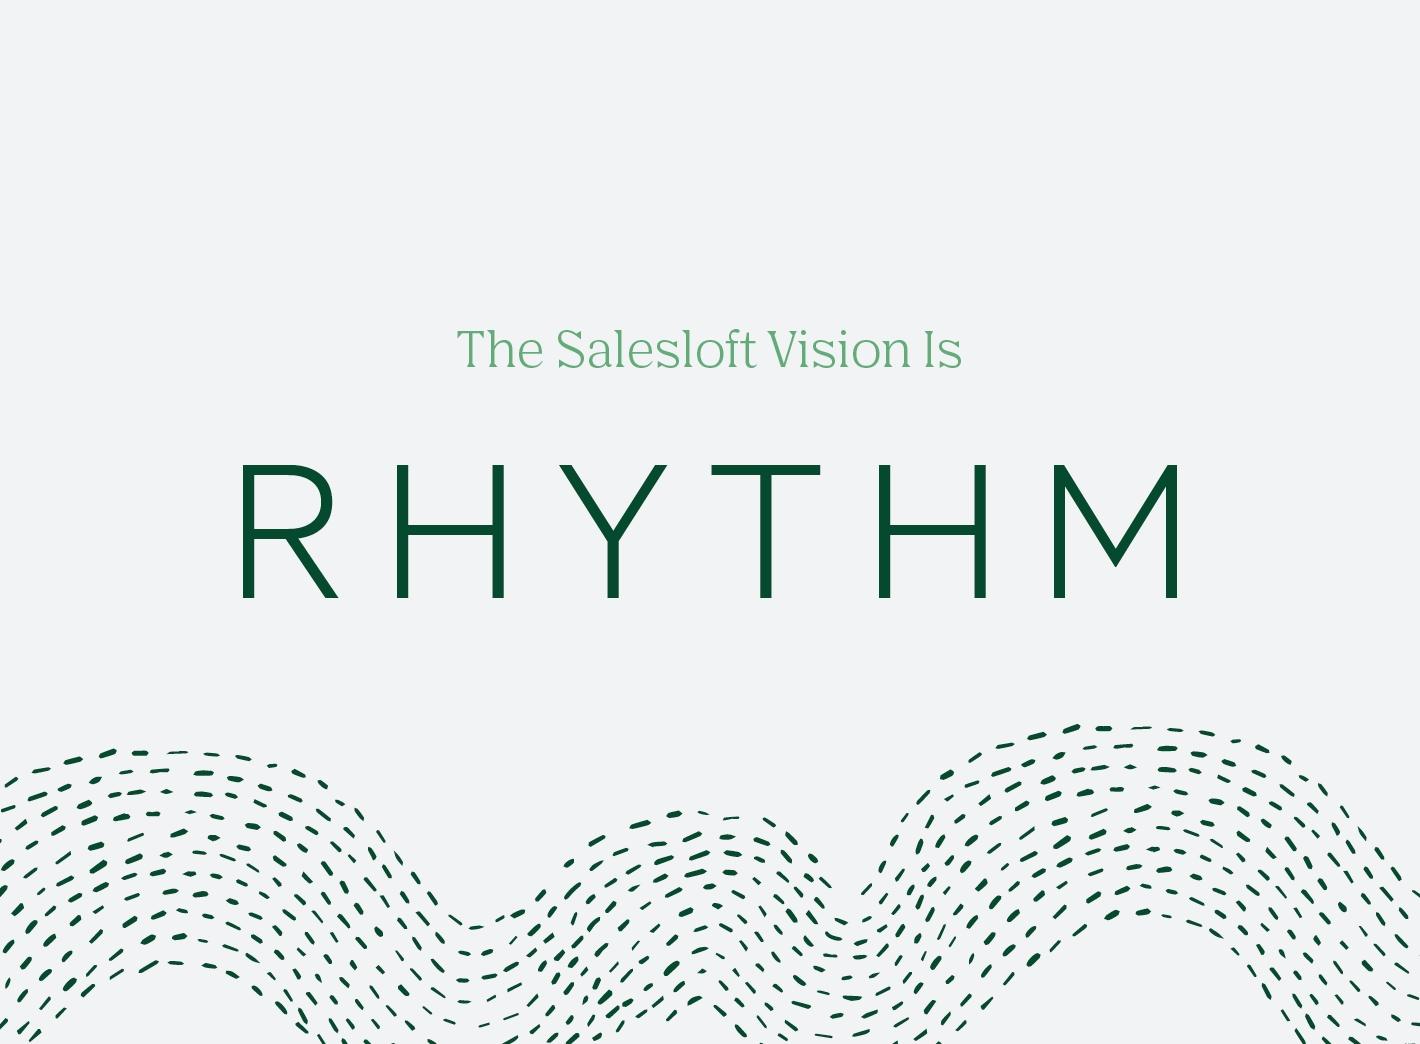 "The Salesloft vision is Rhythm"